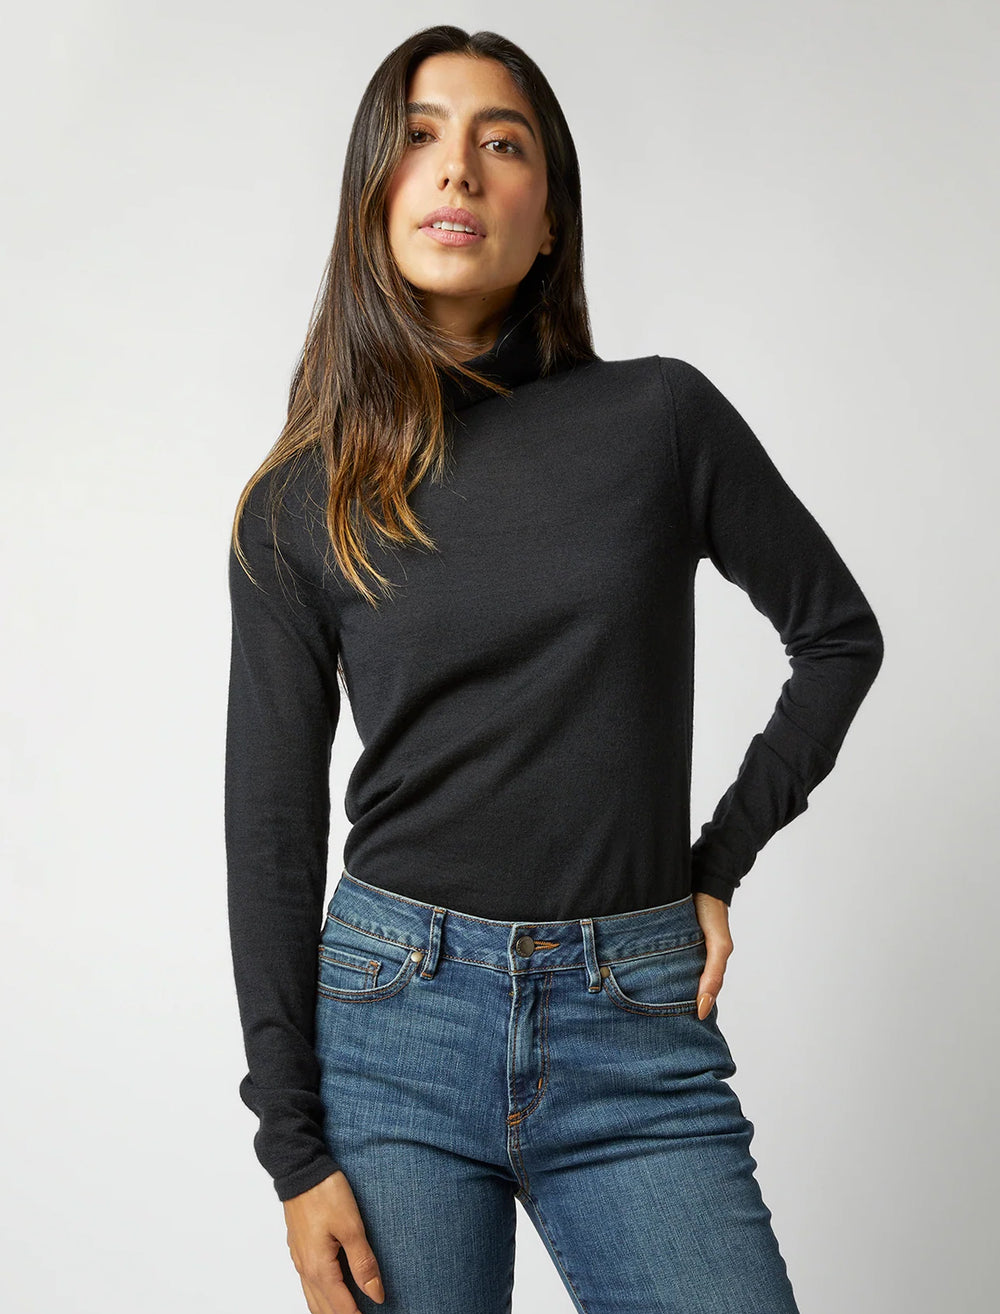 Model wearing Ann Mashburn's funnel neck cashmere sweater in black.